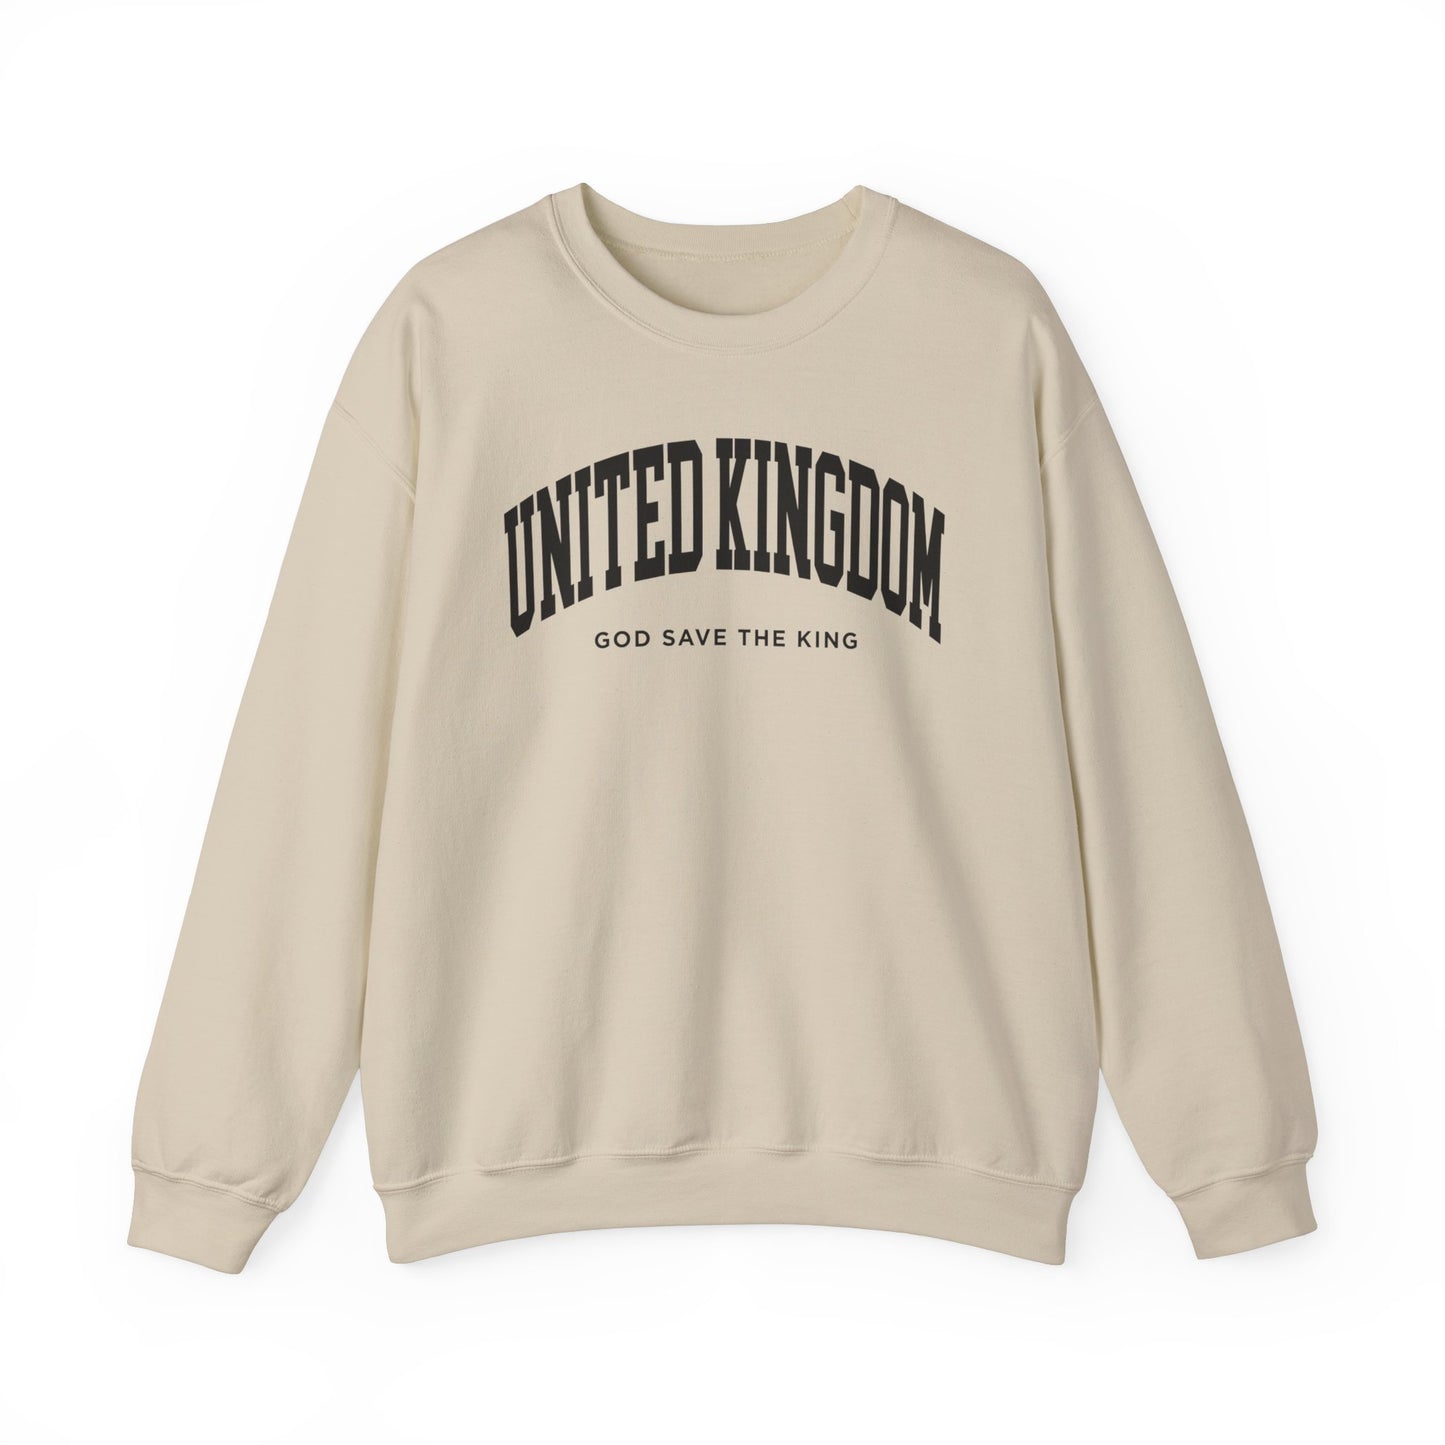 United Kingdom Sweatshirt